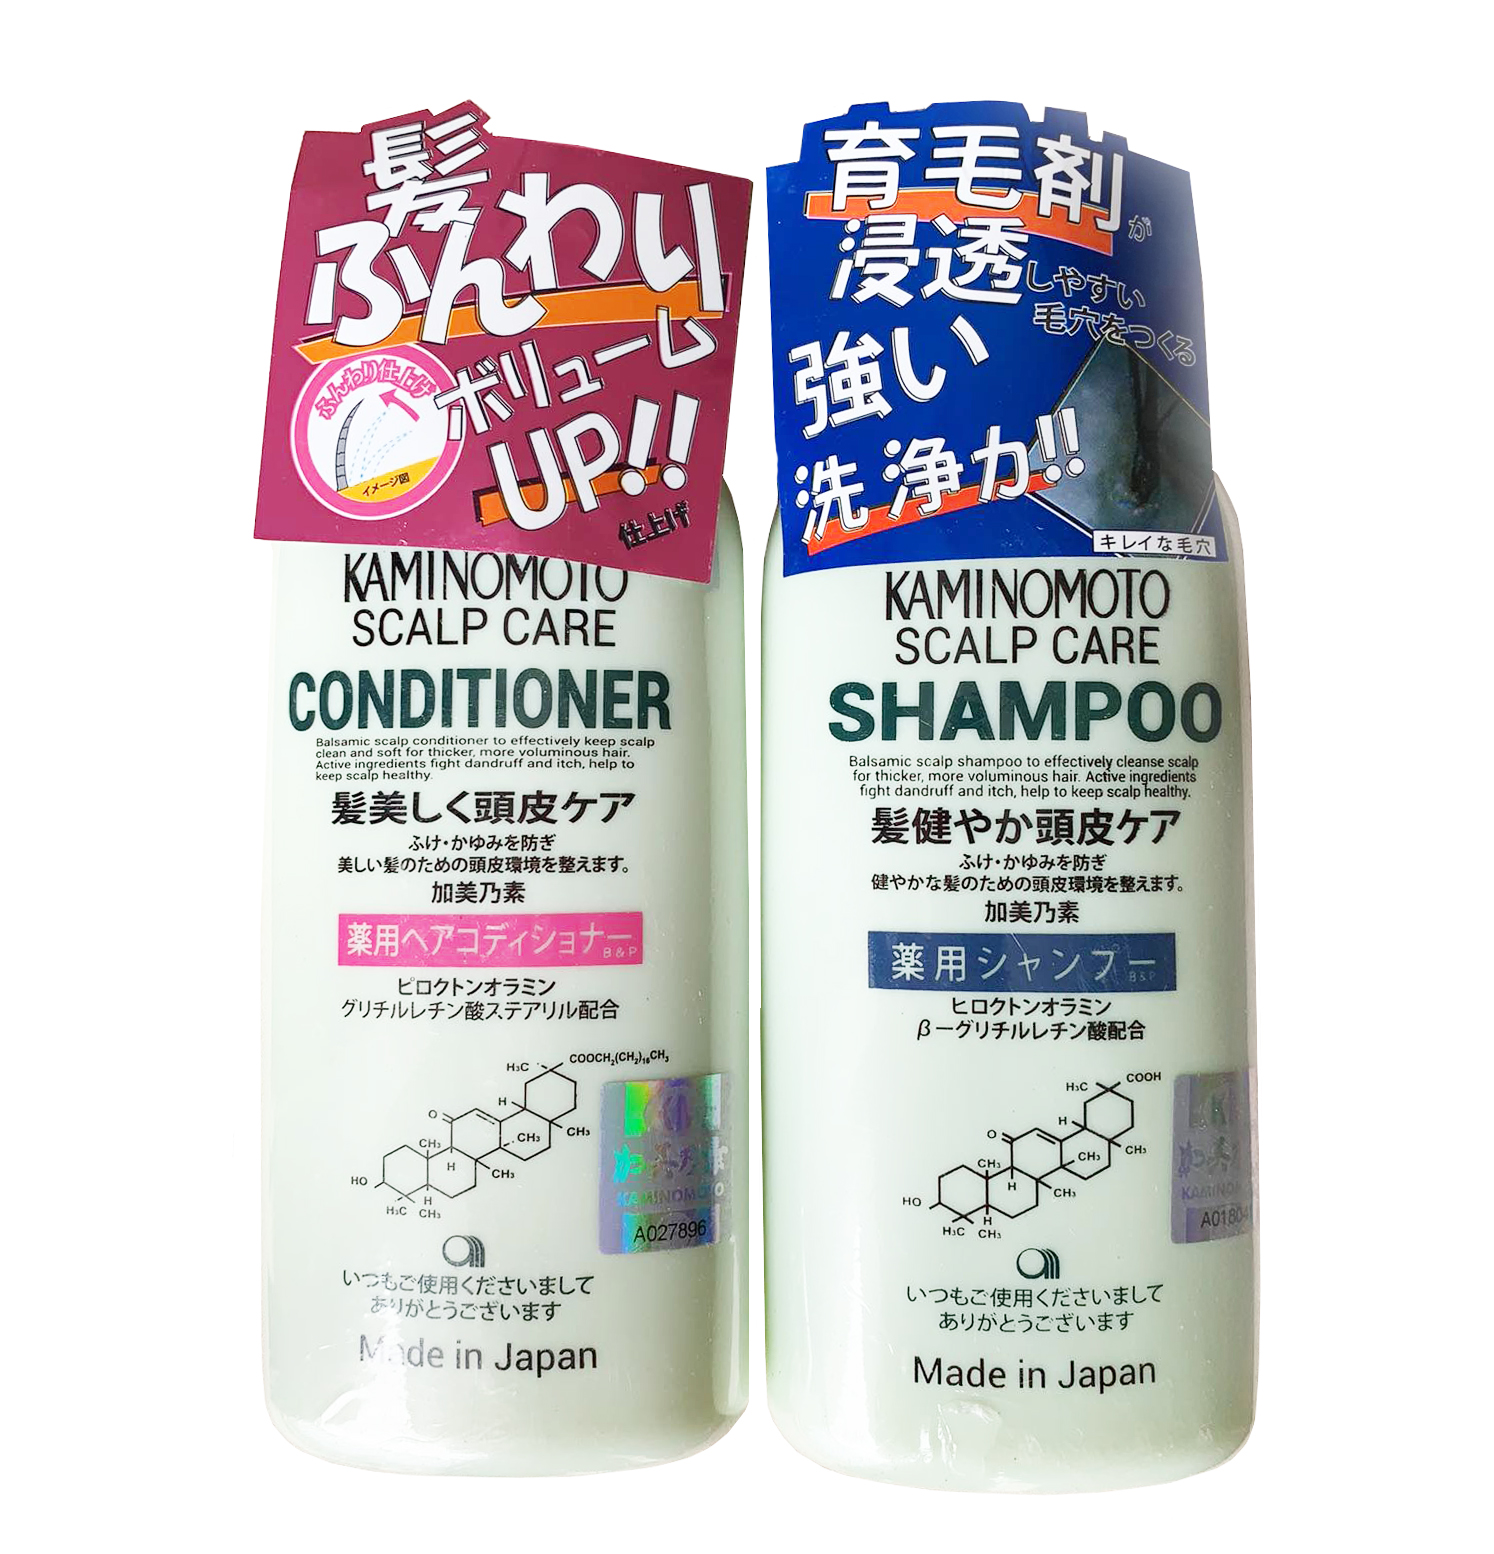 Dầu gội Kaminomoto Medicated Shampoo